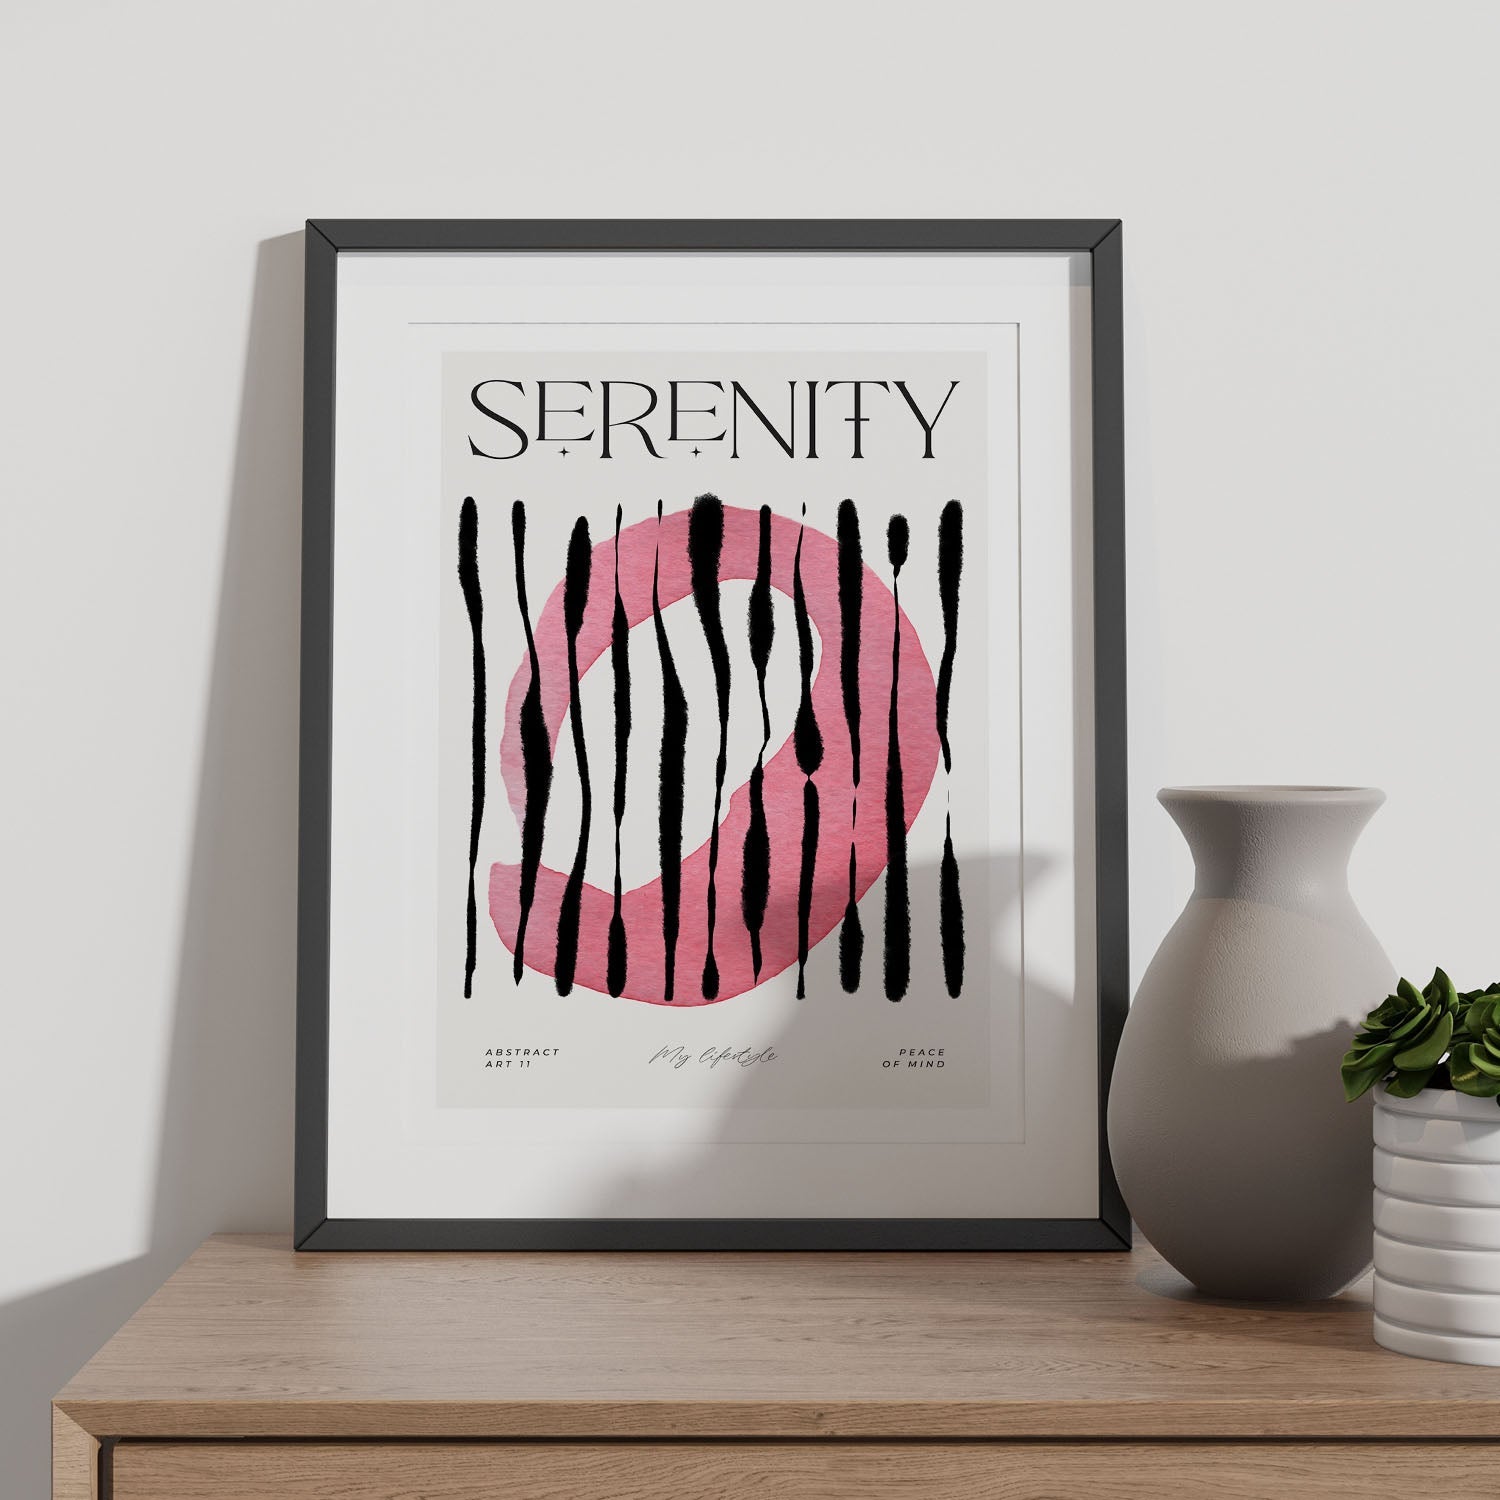 Serenity-Artwork-Nacnic-Nacnic Estudio SL